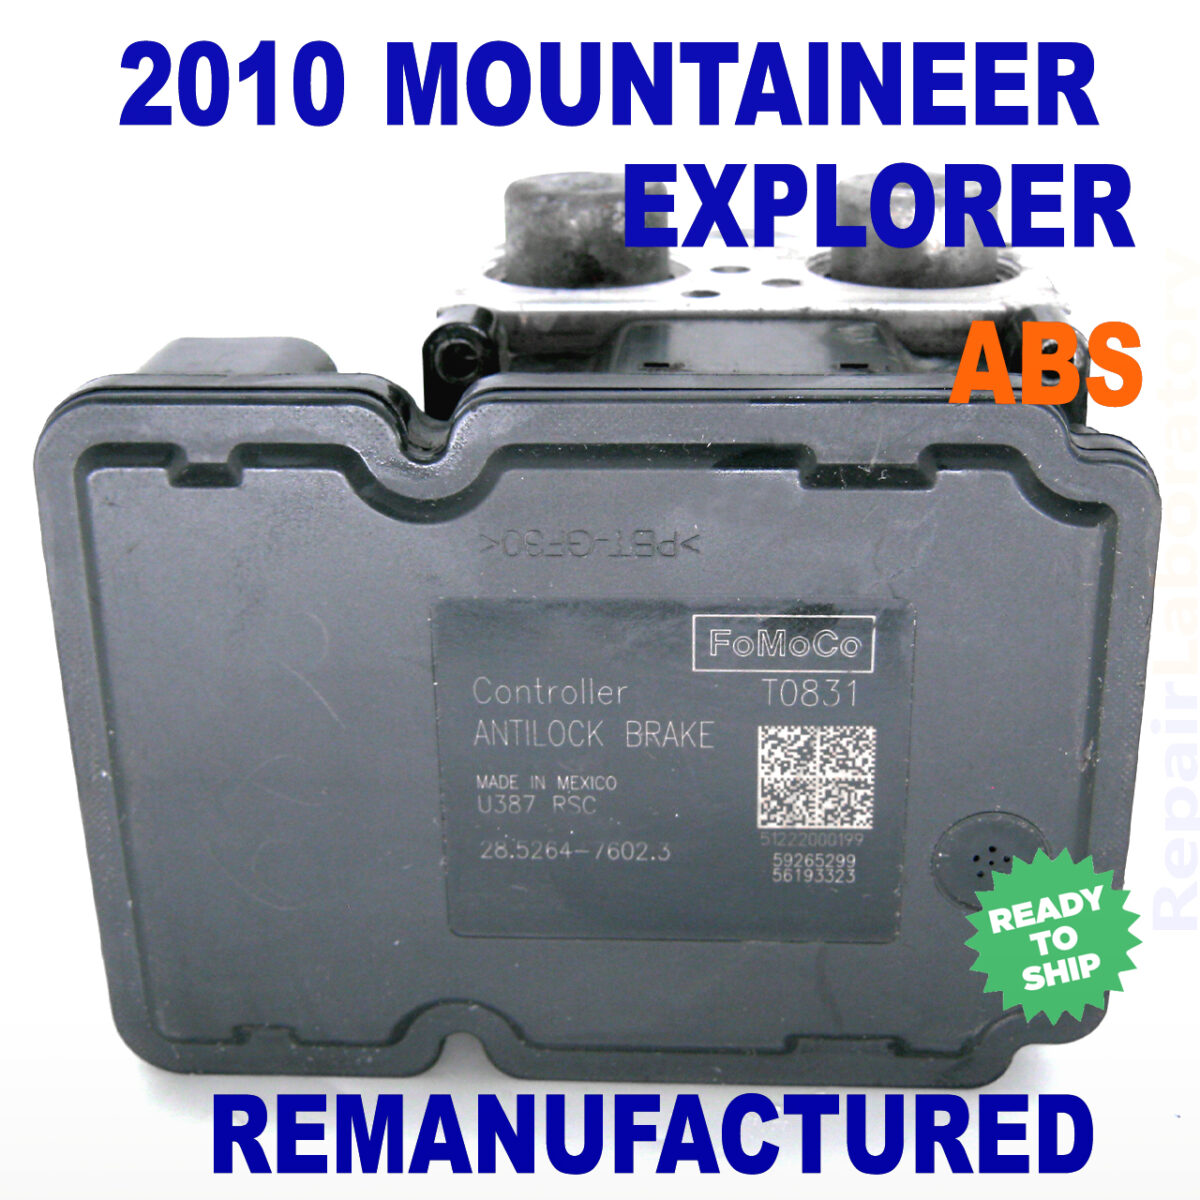 10_explorer_mountaineer_abs_pump_control_module_remanufactured